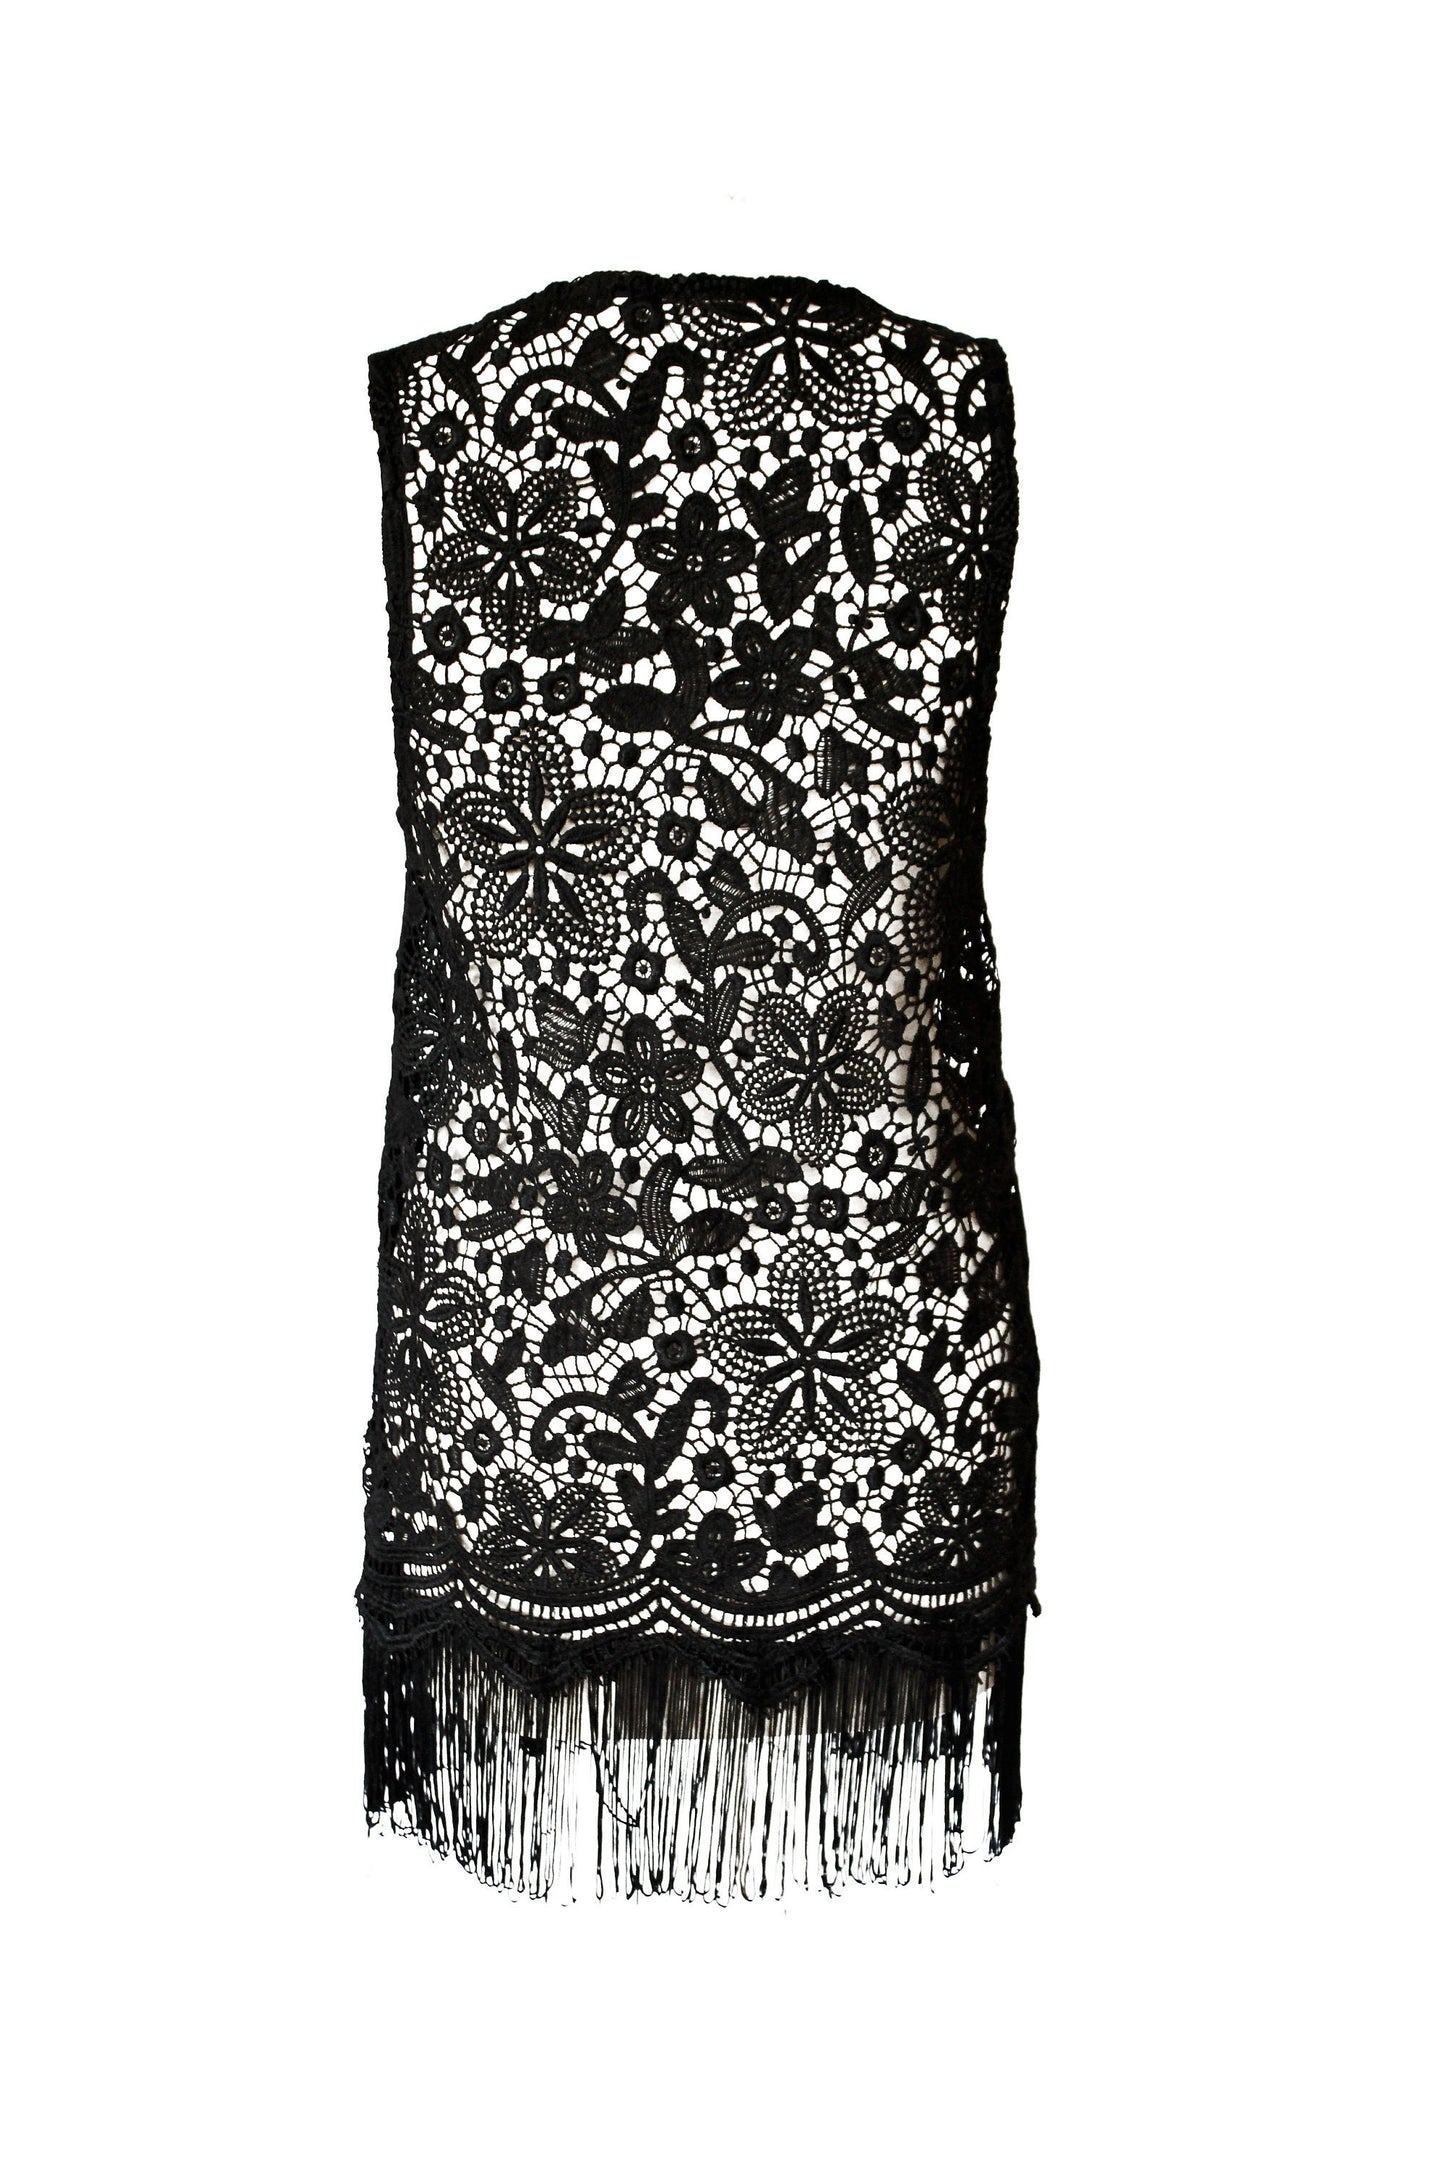 black lace crochet fringe vest boho vest fringed vest burning man vest hippie waistcoat | One size fits all!